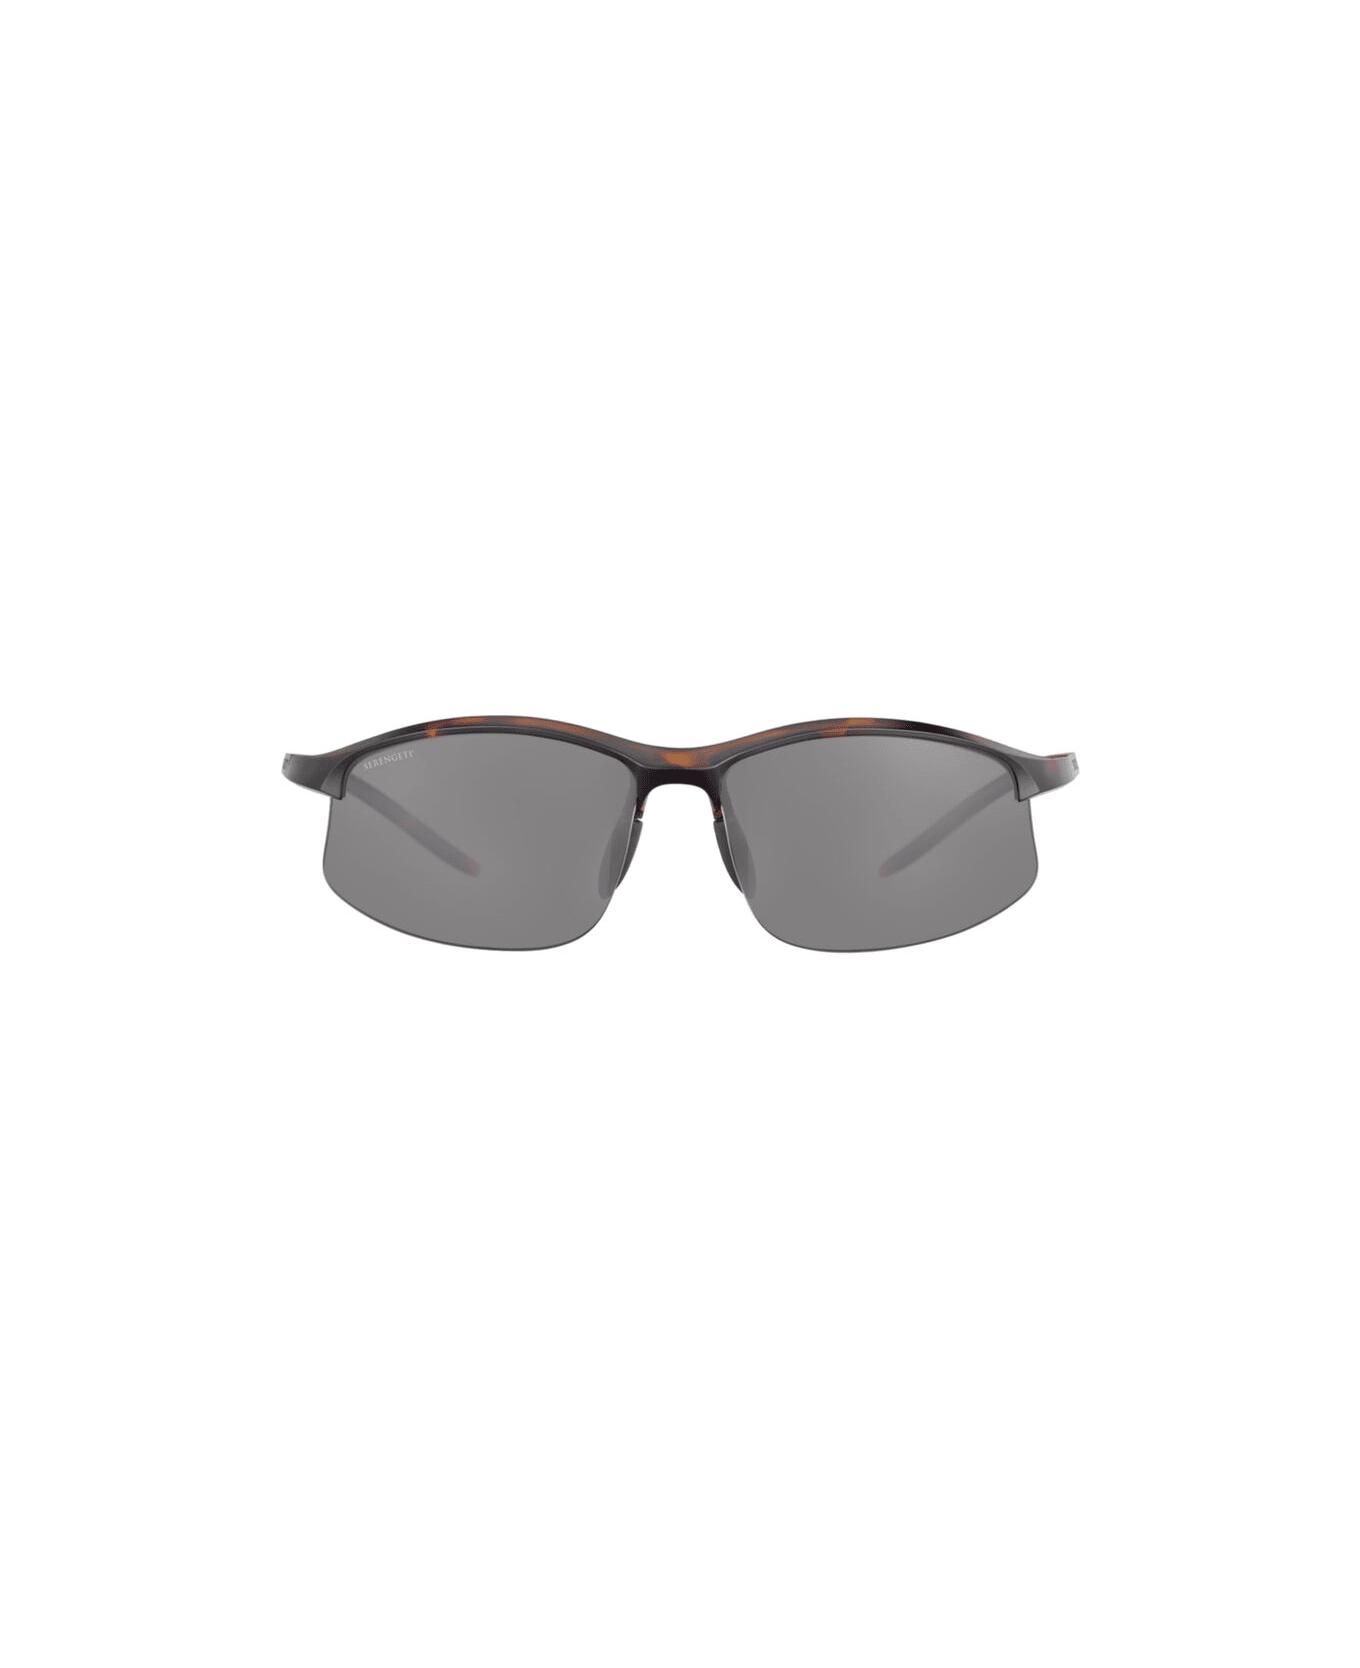 Serengeti Eyewear Winslow 551003 Sunglasses - Marrone lente grigia